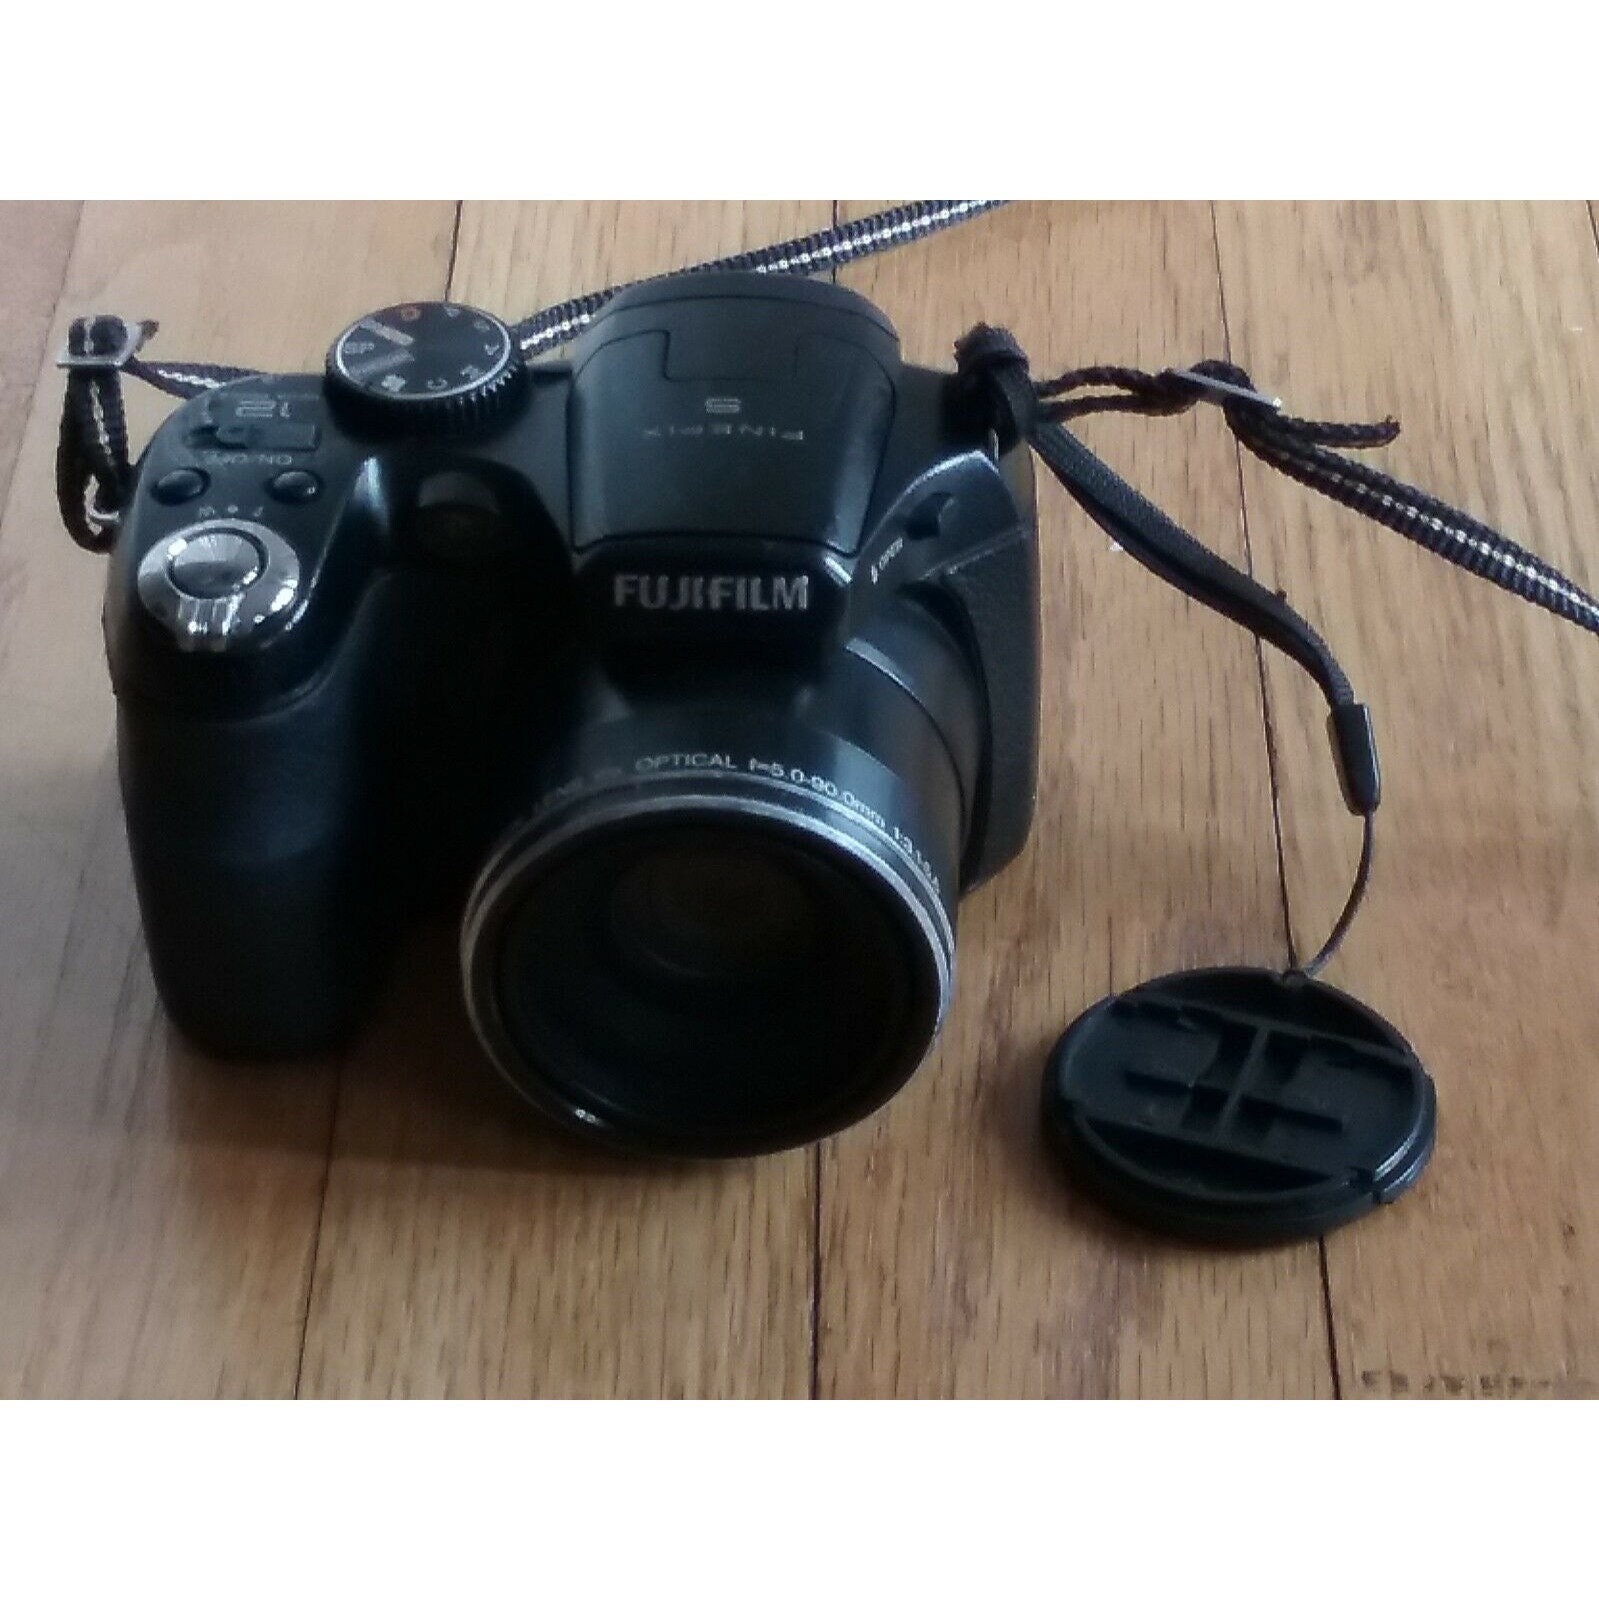 Fujifilm Finepix S Series S1800 12.2MP Digital Camera Black Etsy Finland